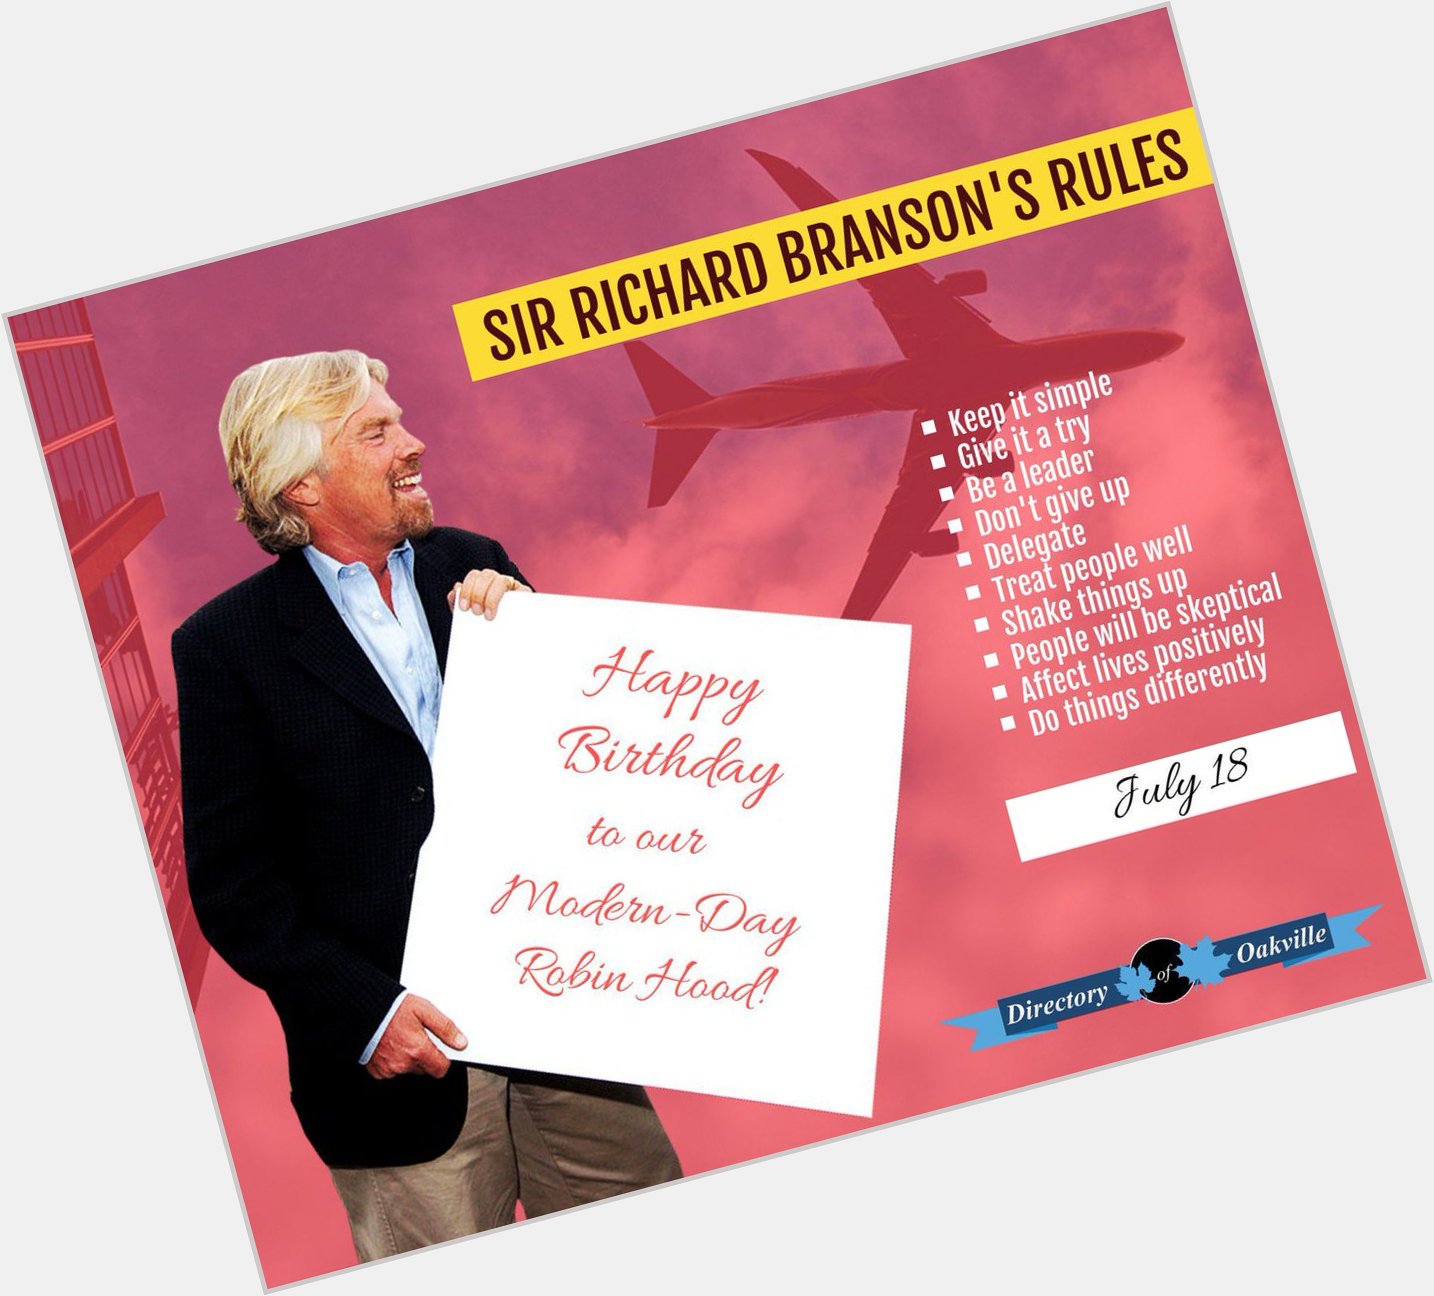 HAPPY BIRTHDAY! Richard Branson, born July 18, 1950 